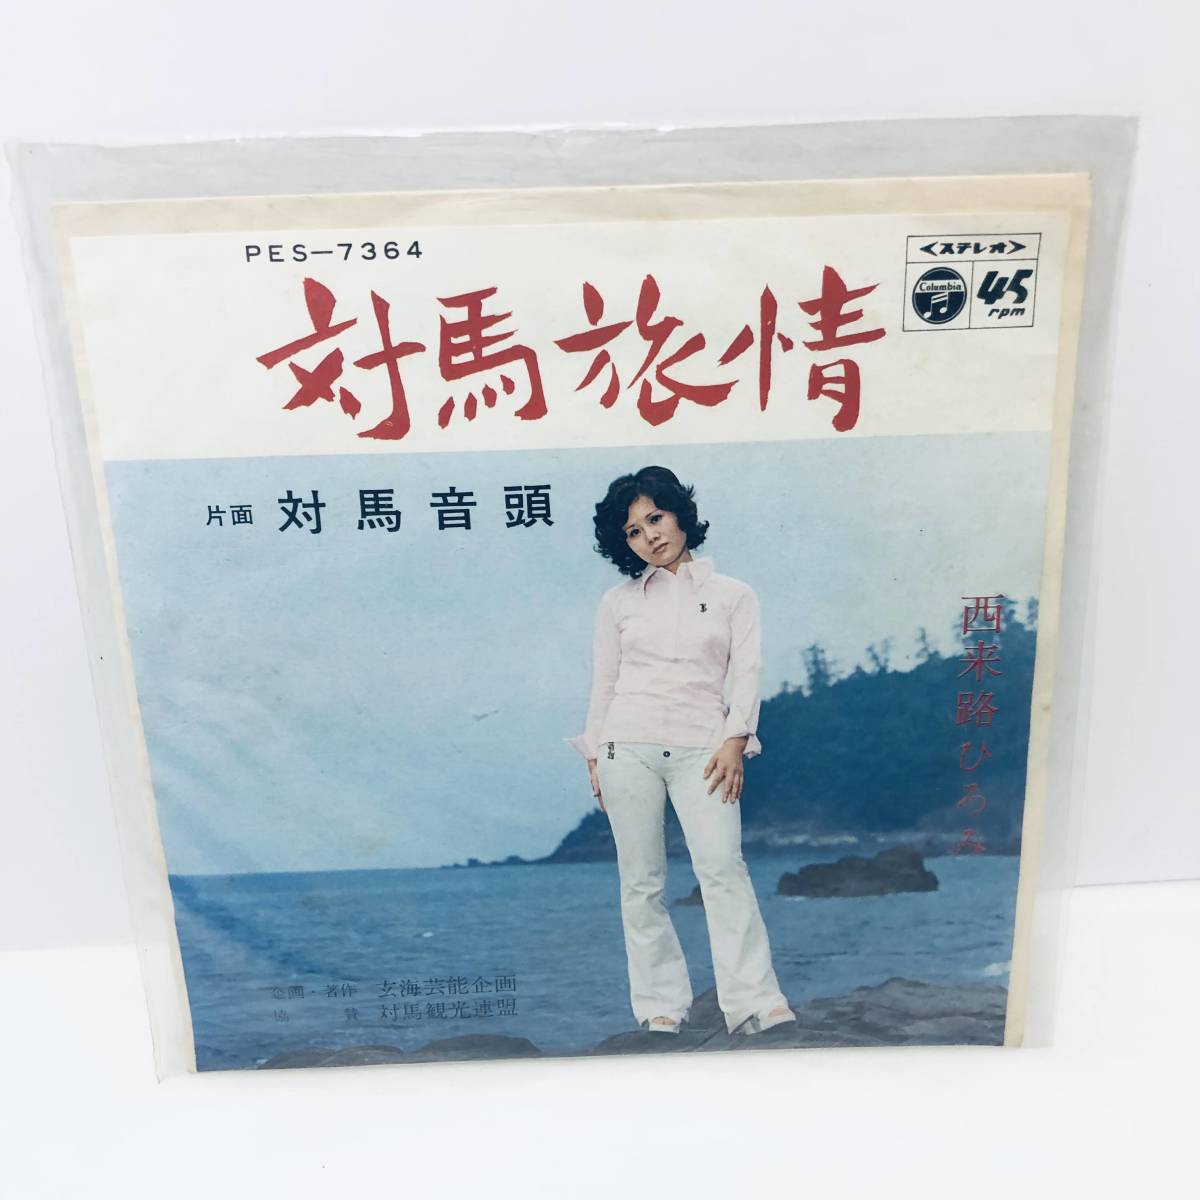 【EP】西来路ひろみ「対馬旅情/対馬音頭(1972年・委託制作盤)」レコード 45rpm_画像1